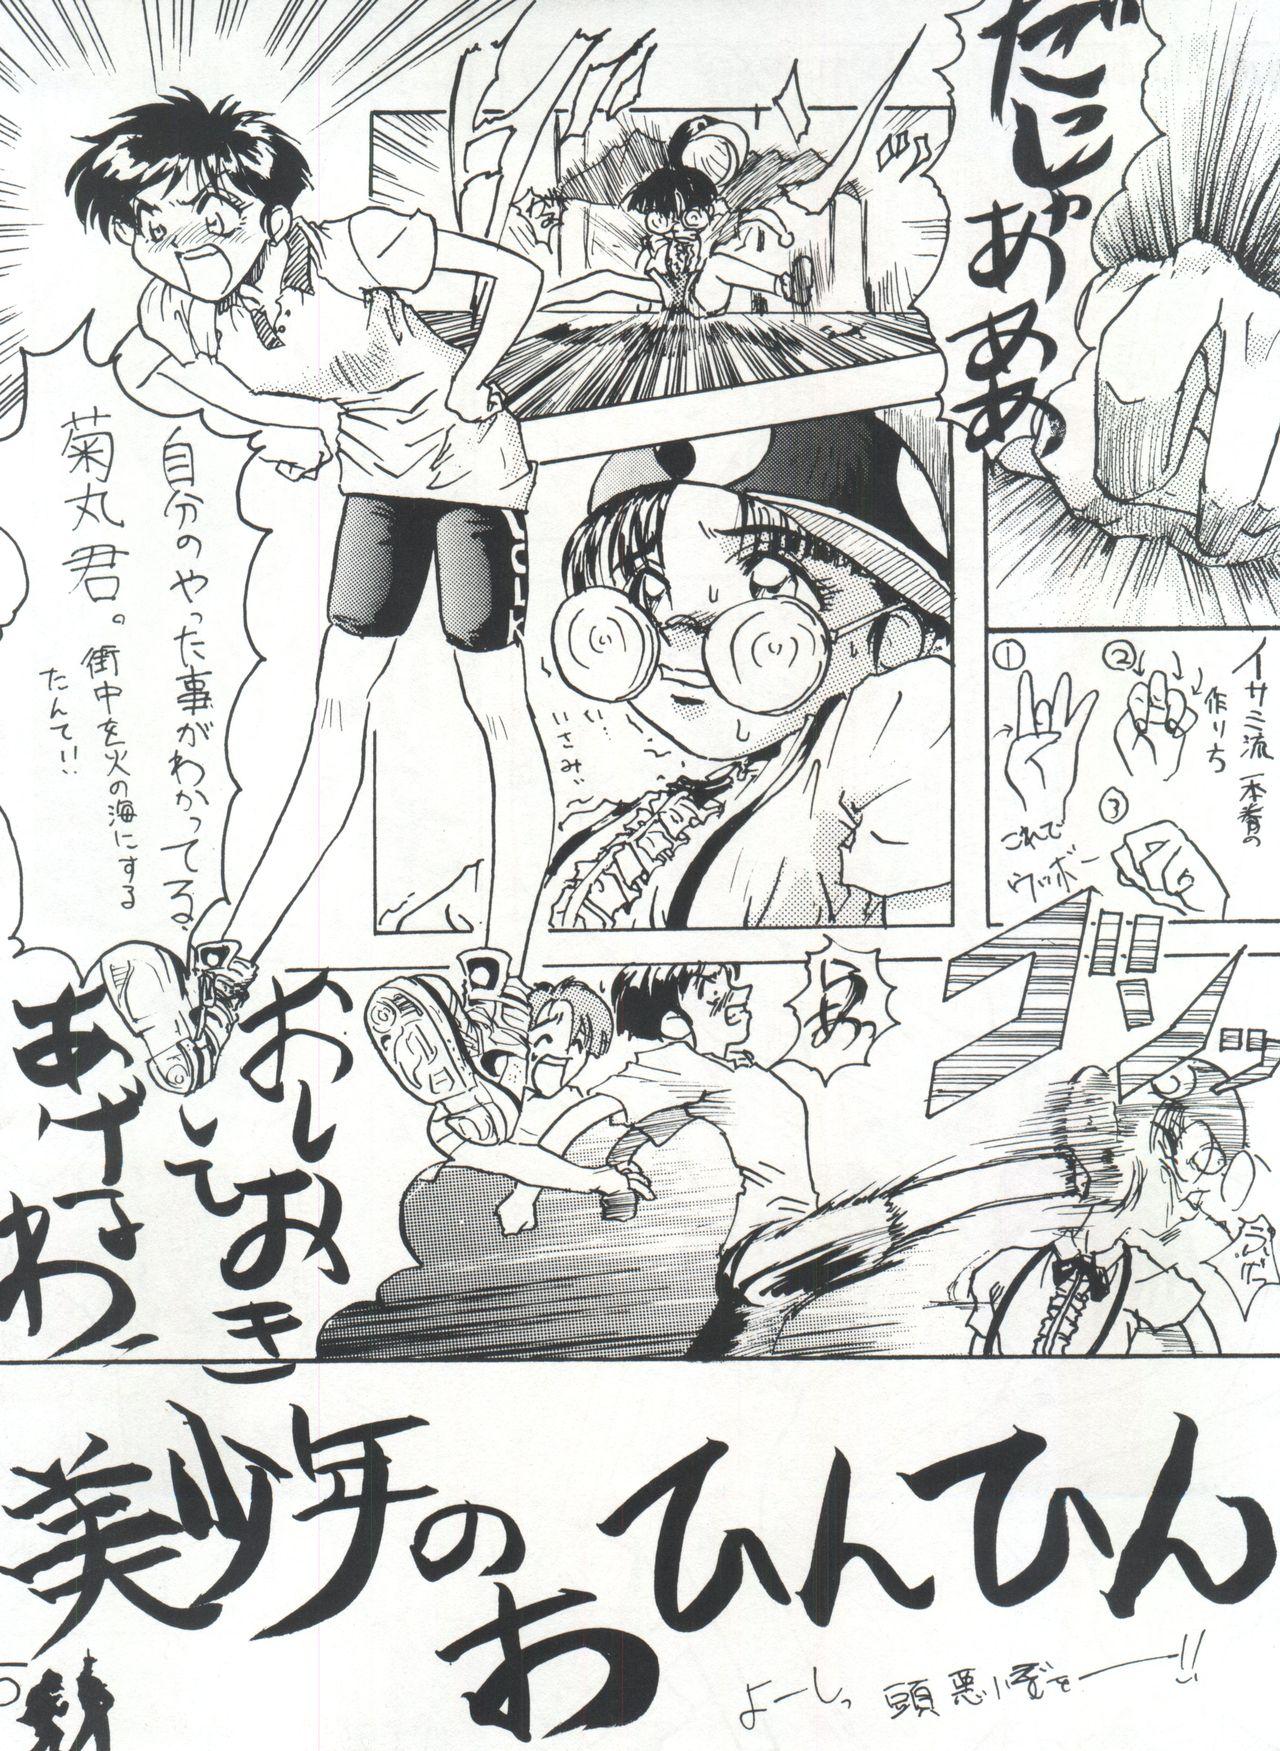 Milk Kakushi Toride no San Akunin - Tobe isami Cartoon - Page 5